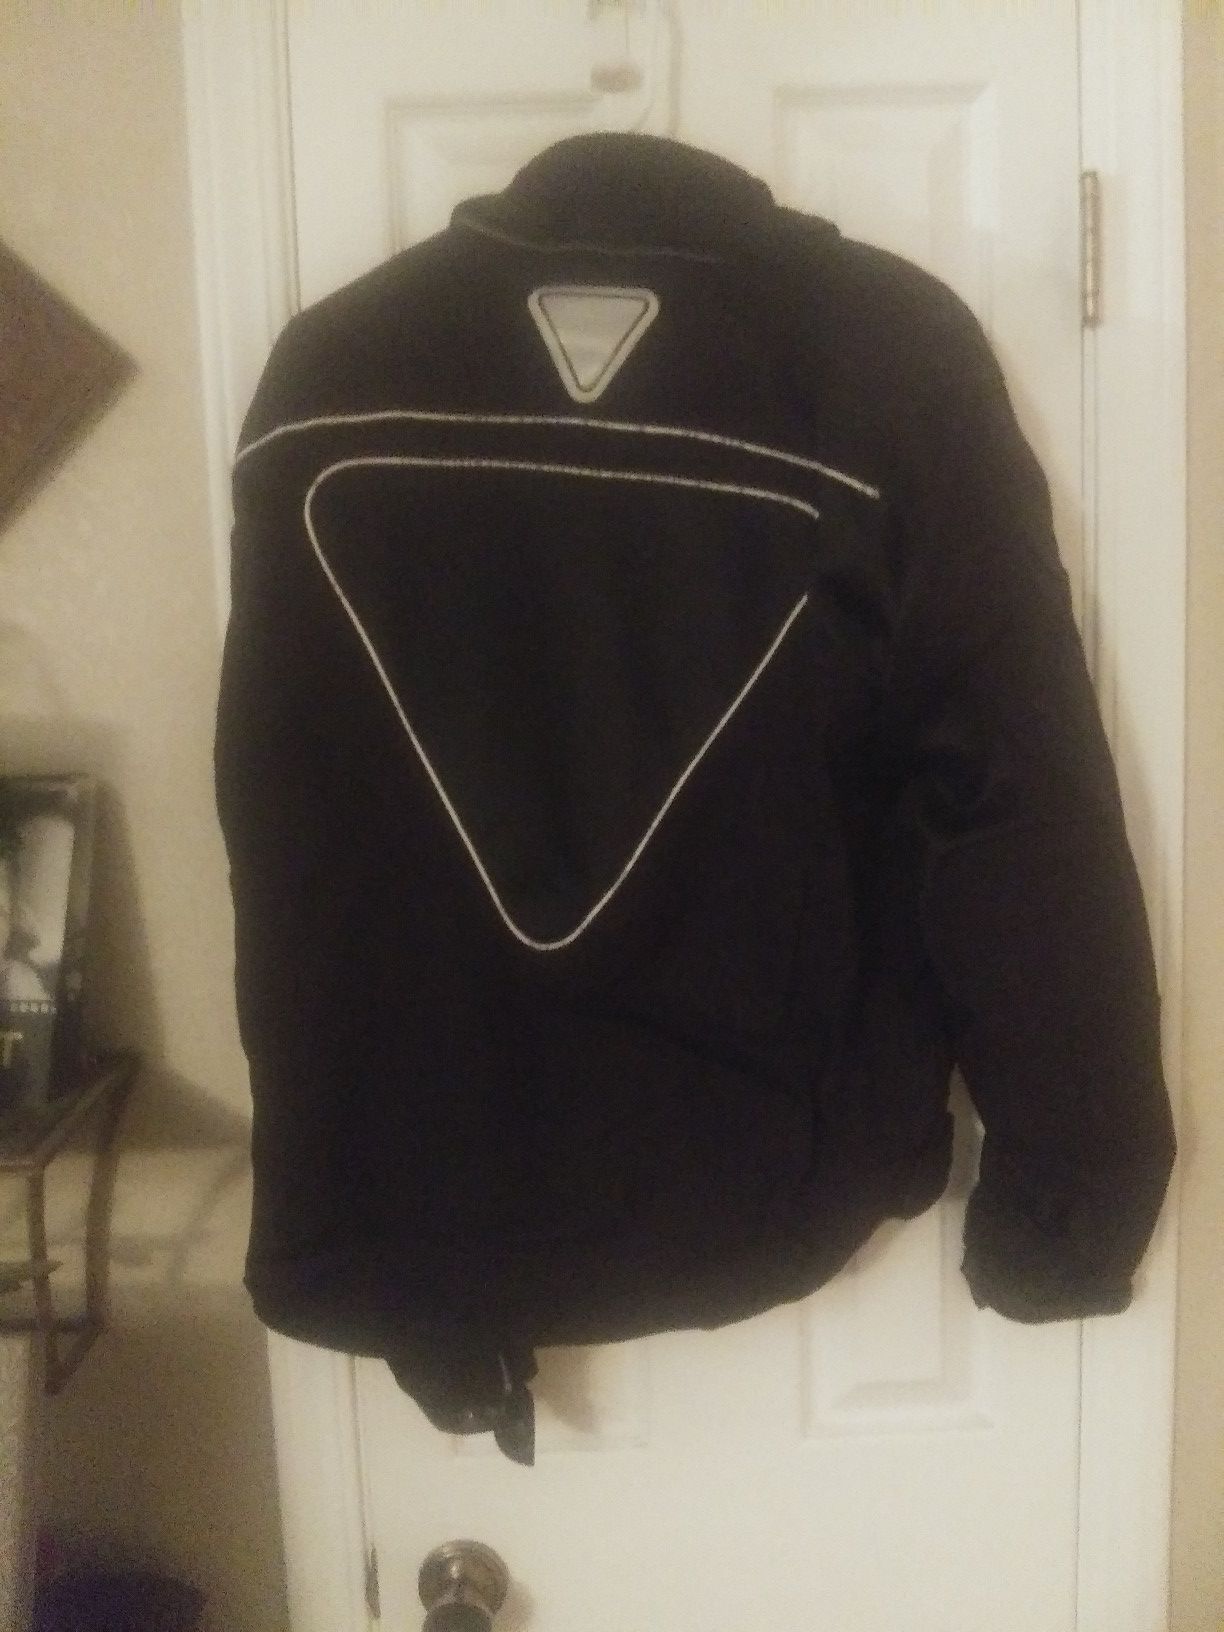 Triumph motorcycle jacket$60